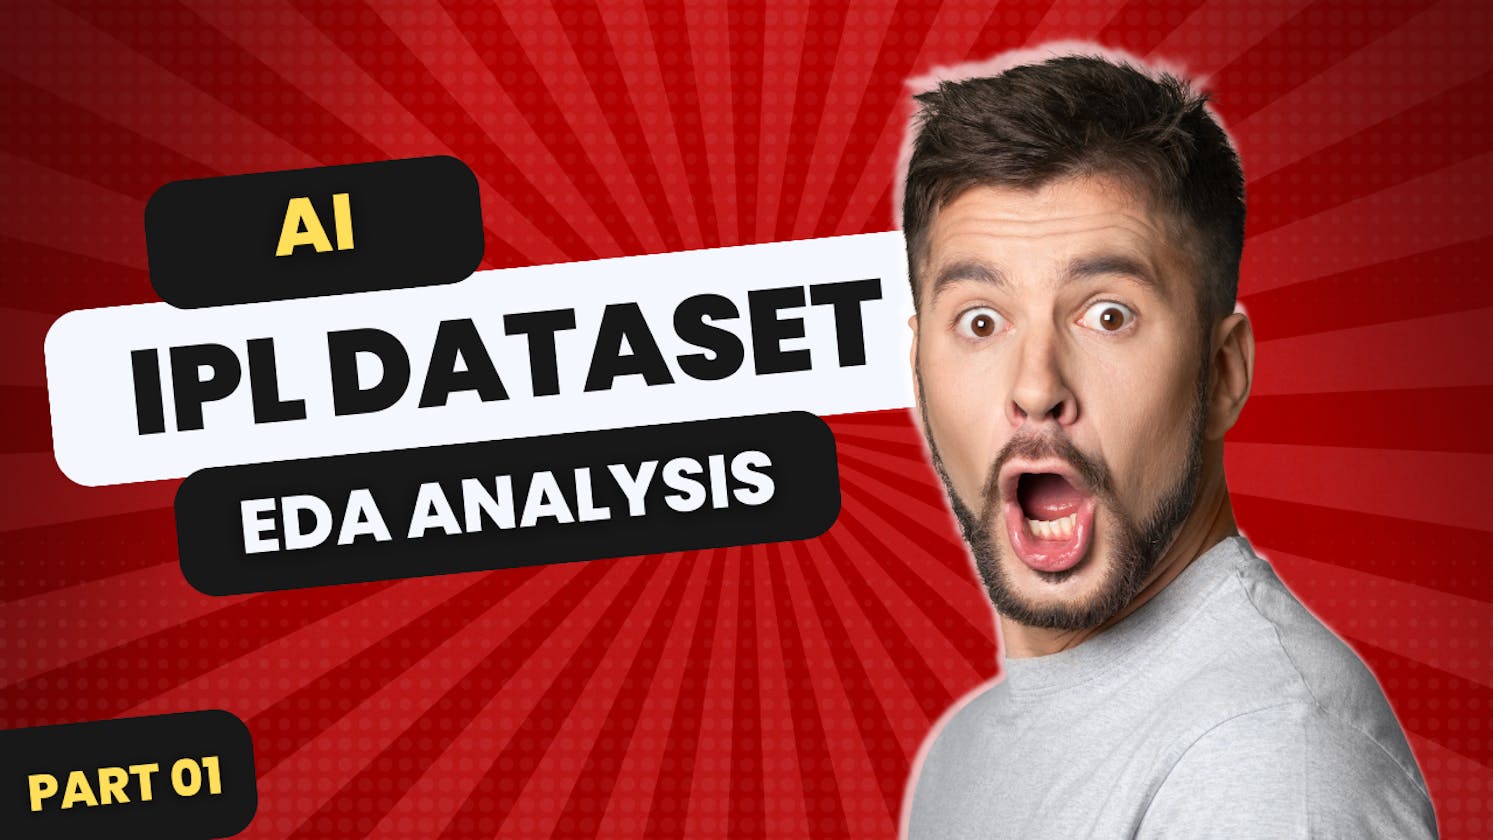 EDA Analysis on IPL Dataset